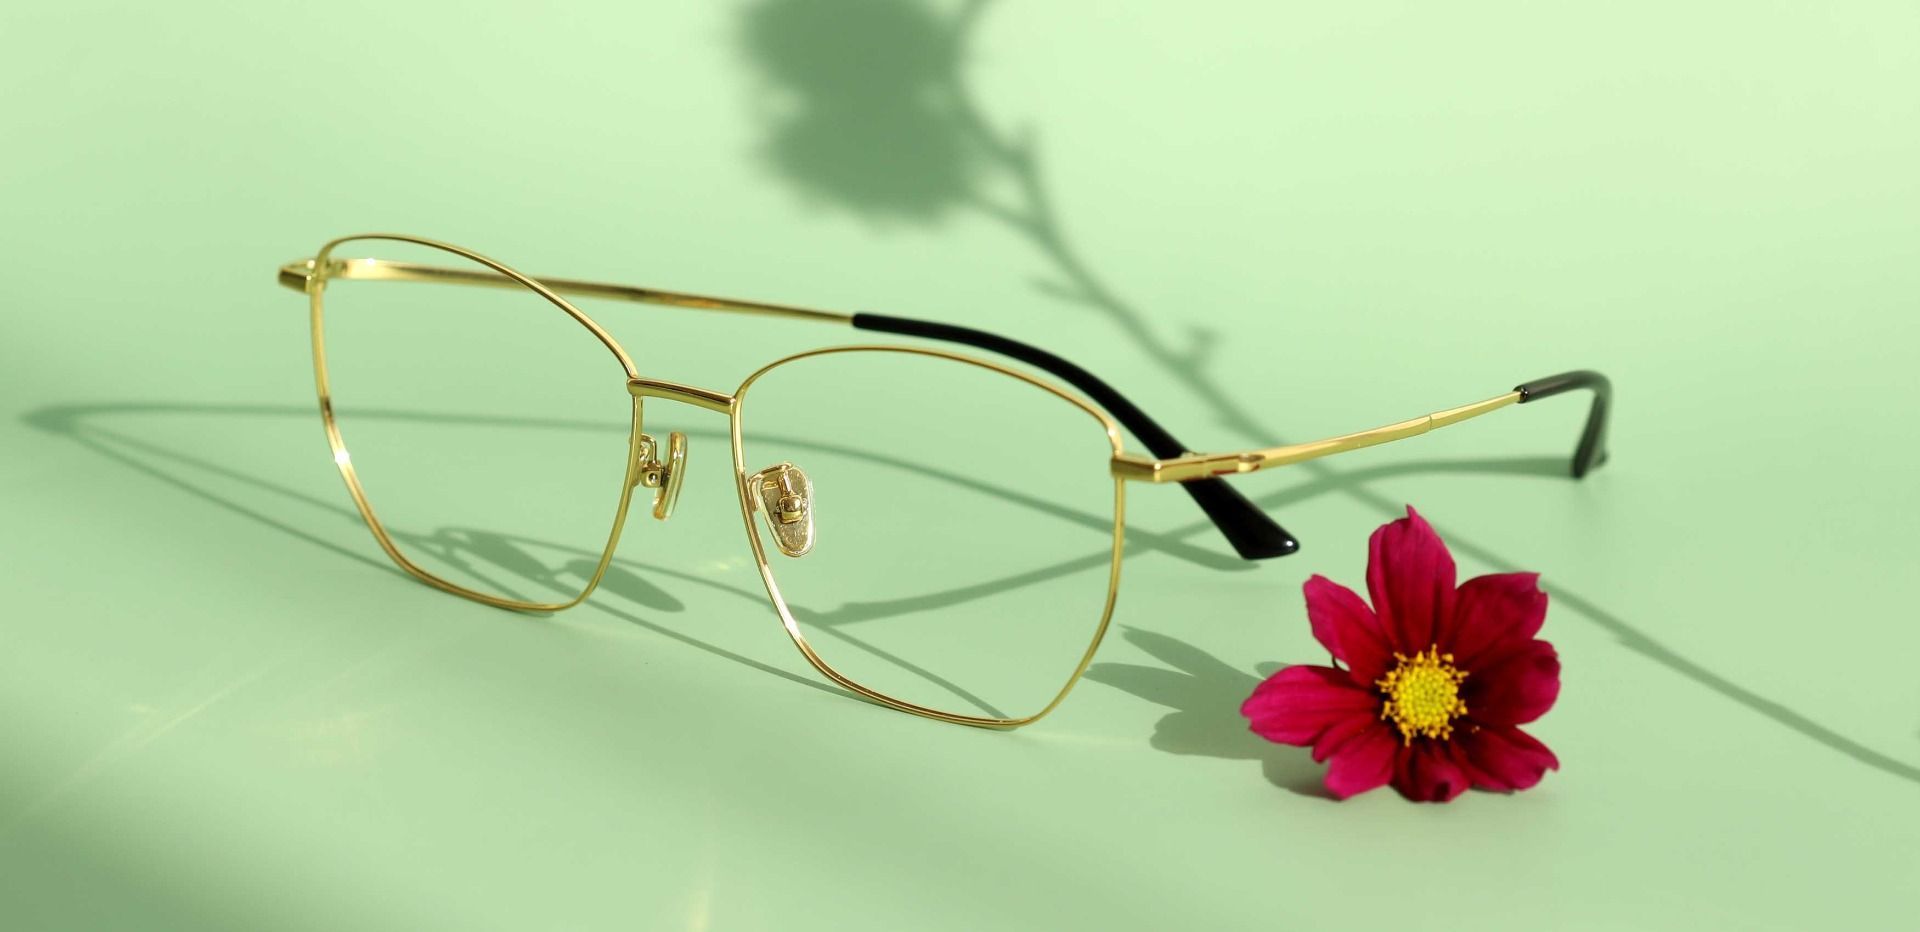 Boswell Geometric Lined Bifocal Glasses - Gold